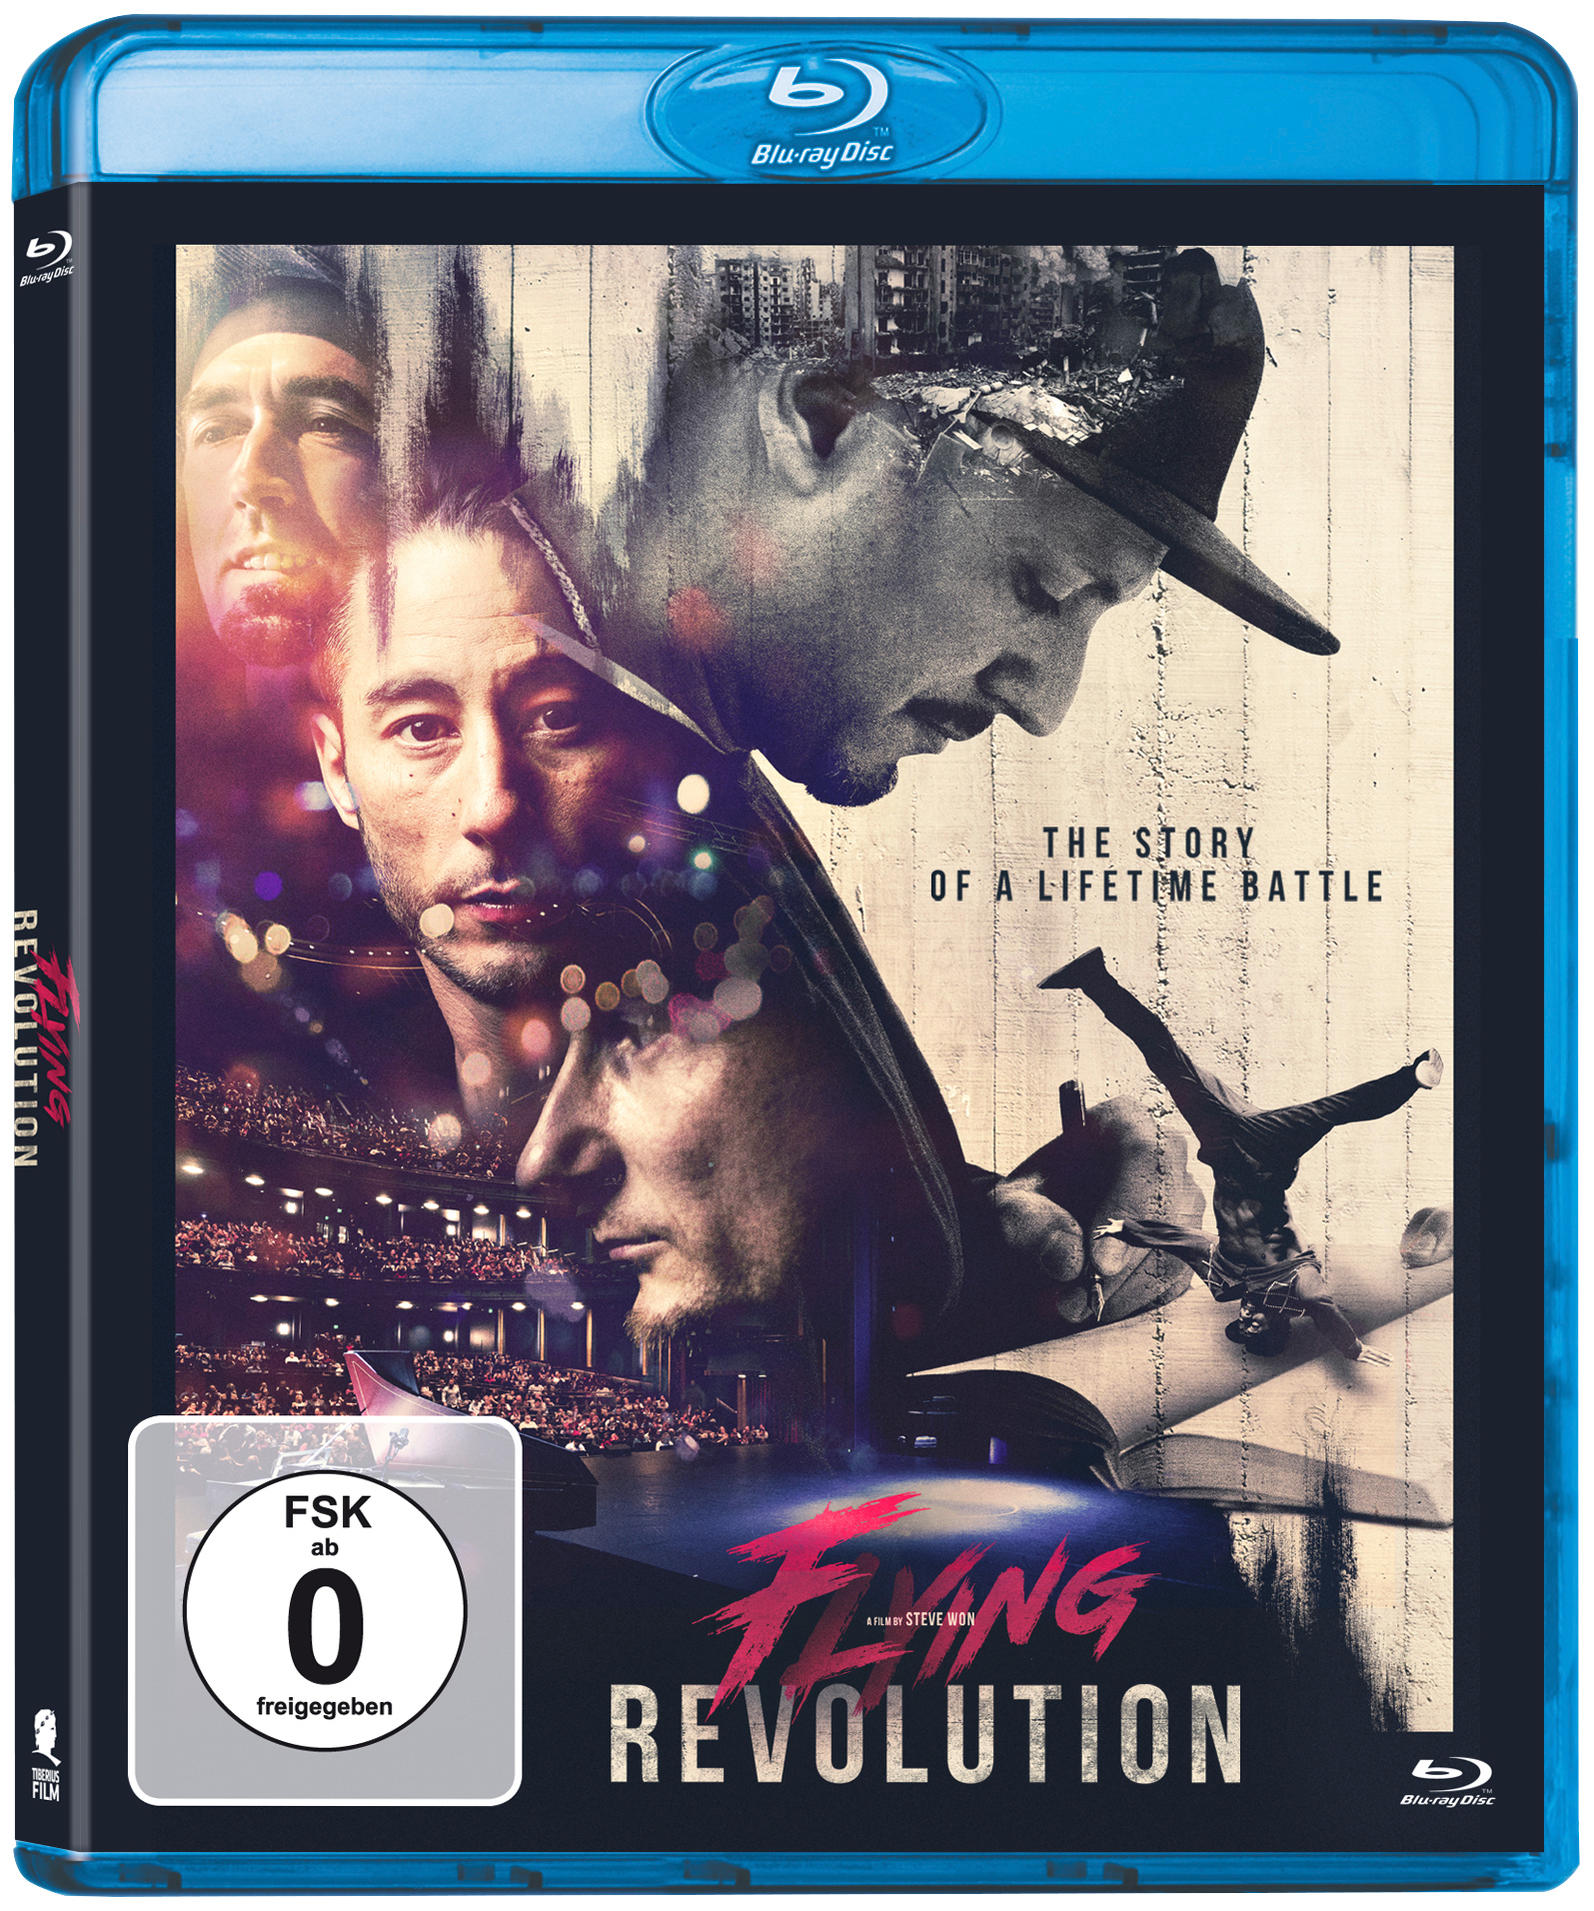 Blu-ray Flying Revolution